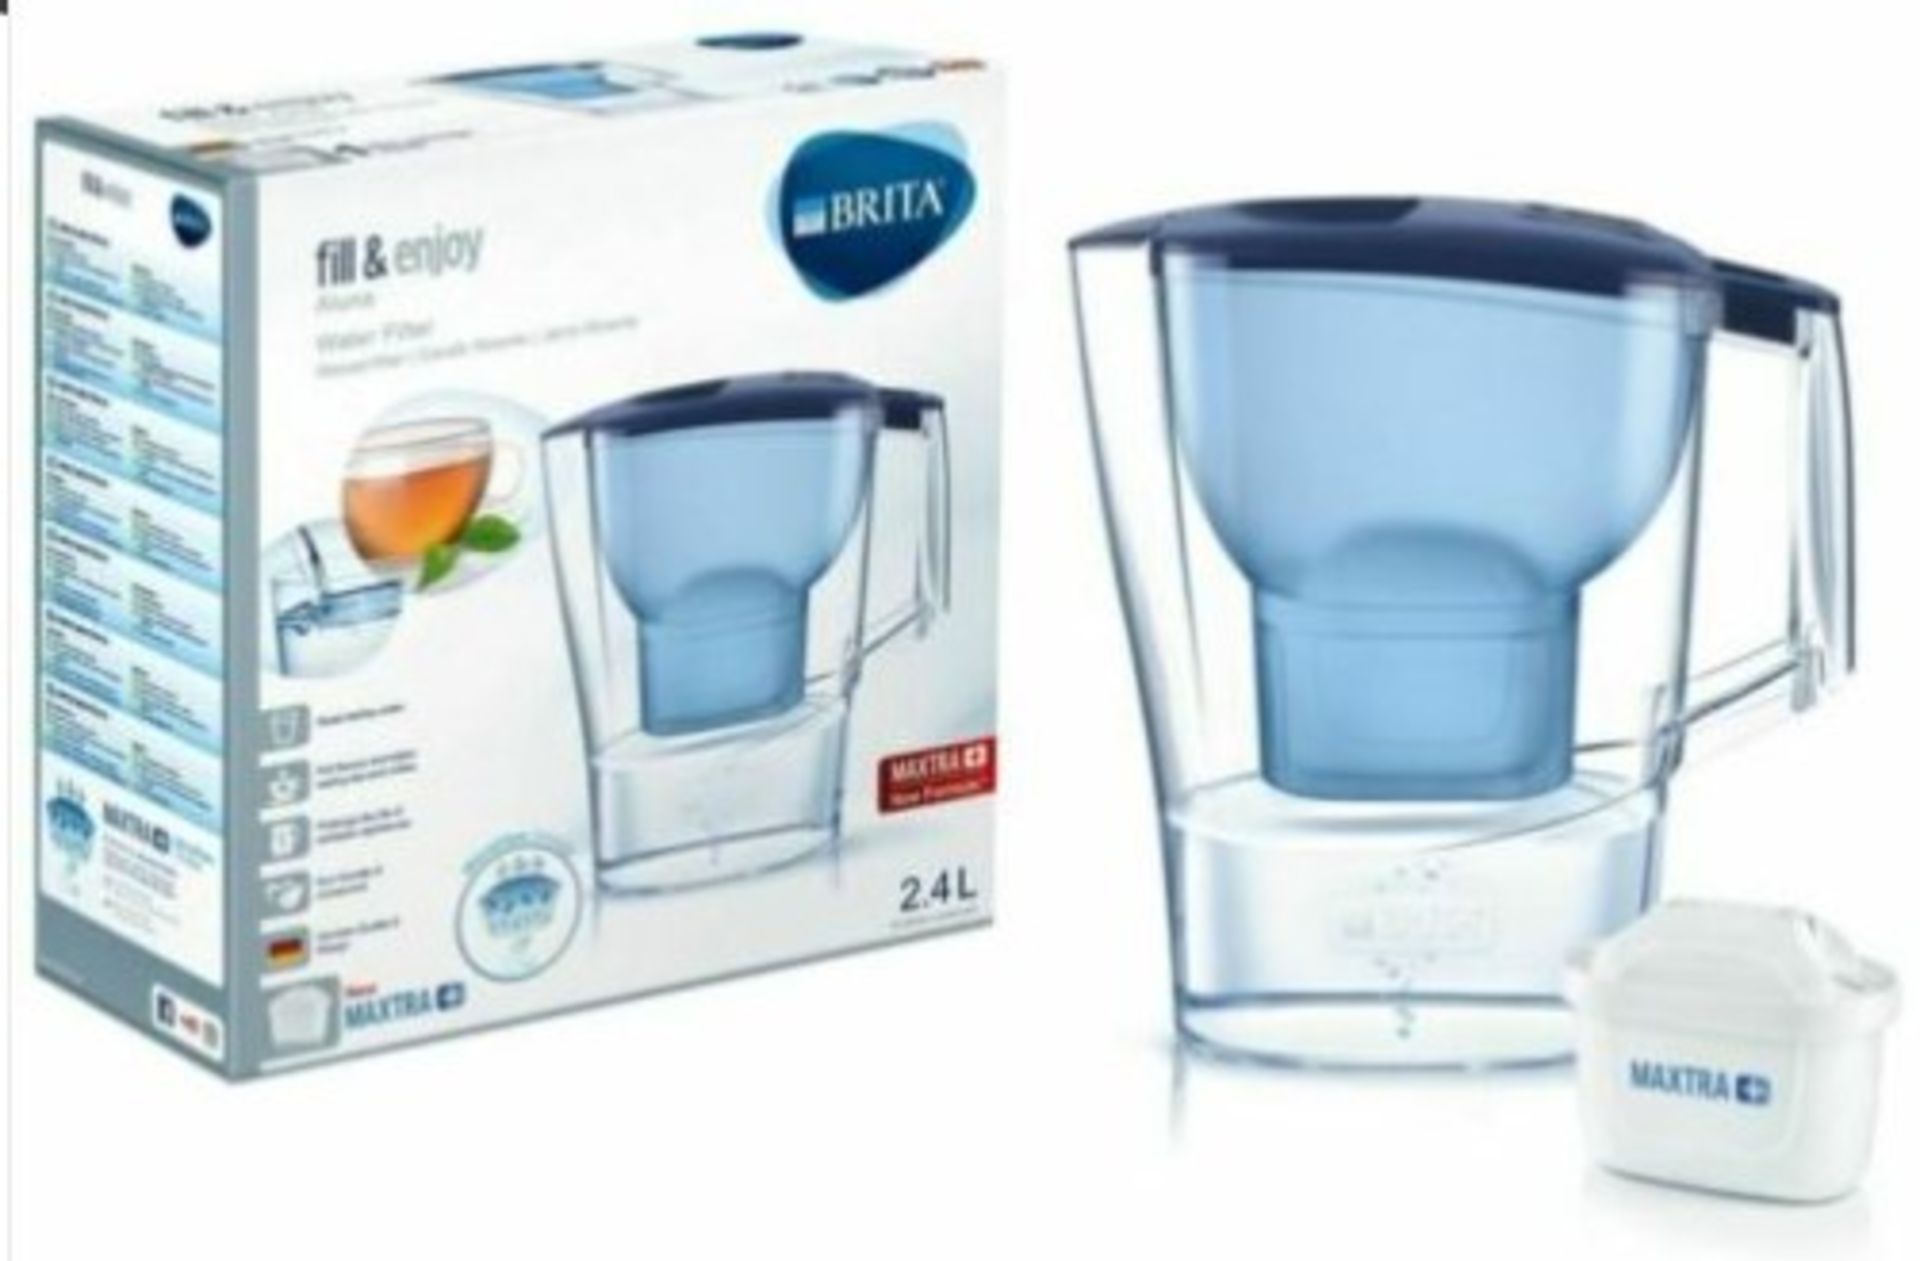 RRP-£12 BRITA Aluna fridge water filter jug for reduction of chlorine, limescale and impurities, Inc